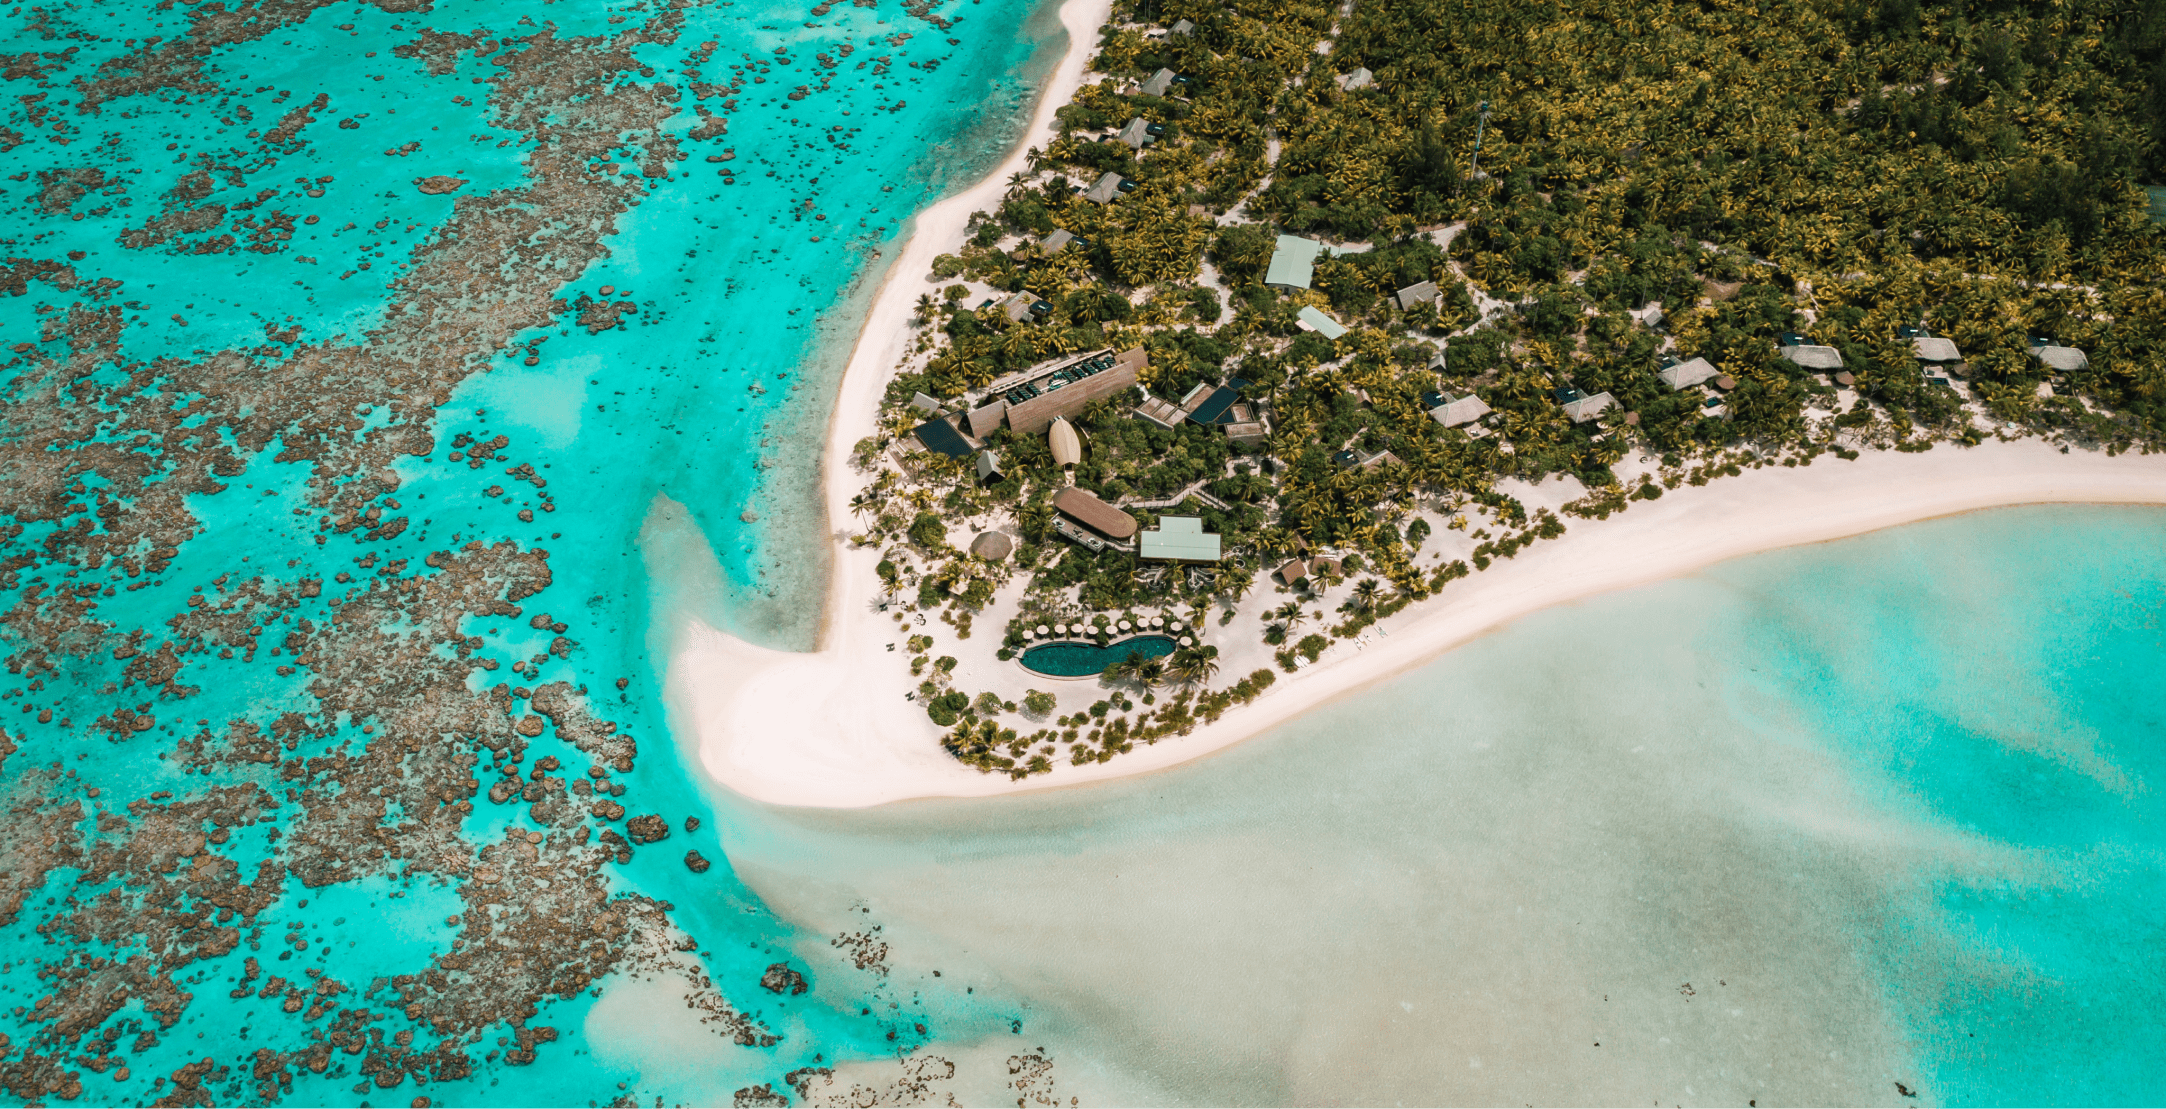 Bird's-eye view of The Brando resort in Tahiti, jutting into the ocean